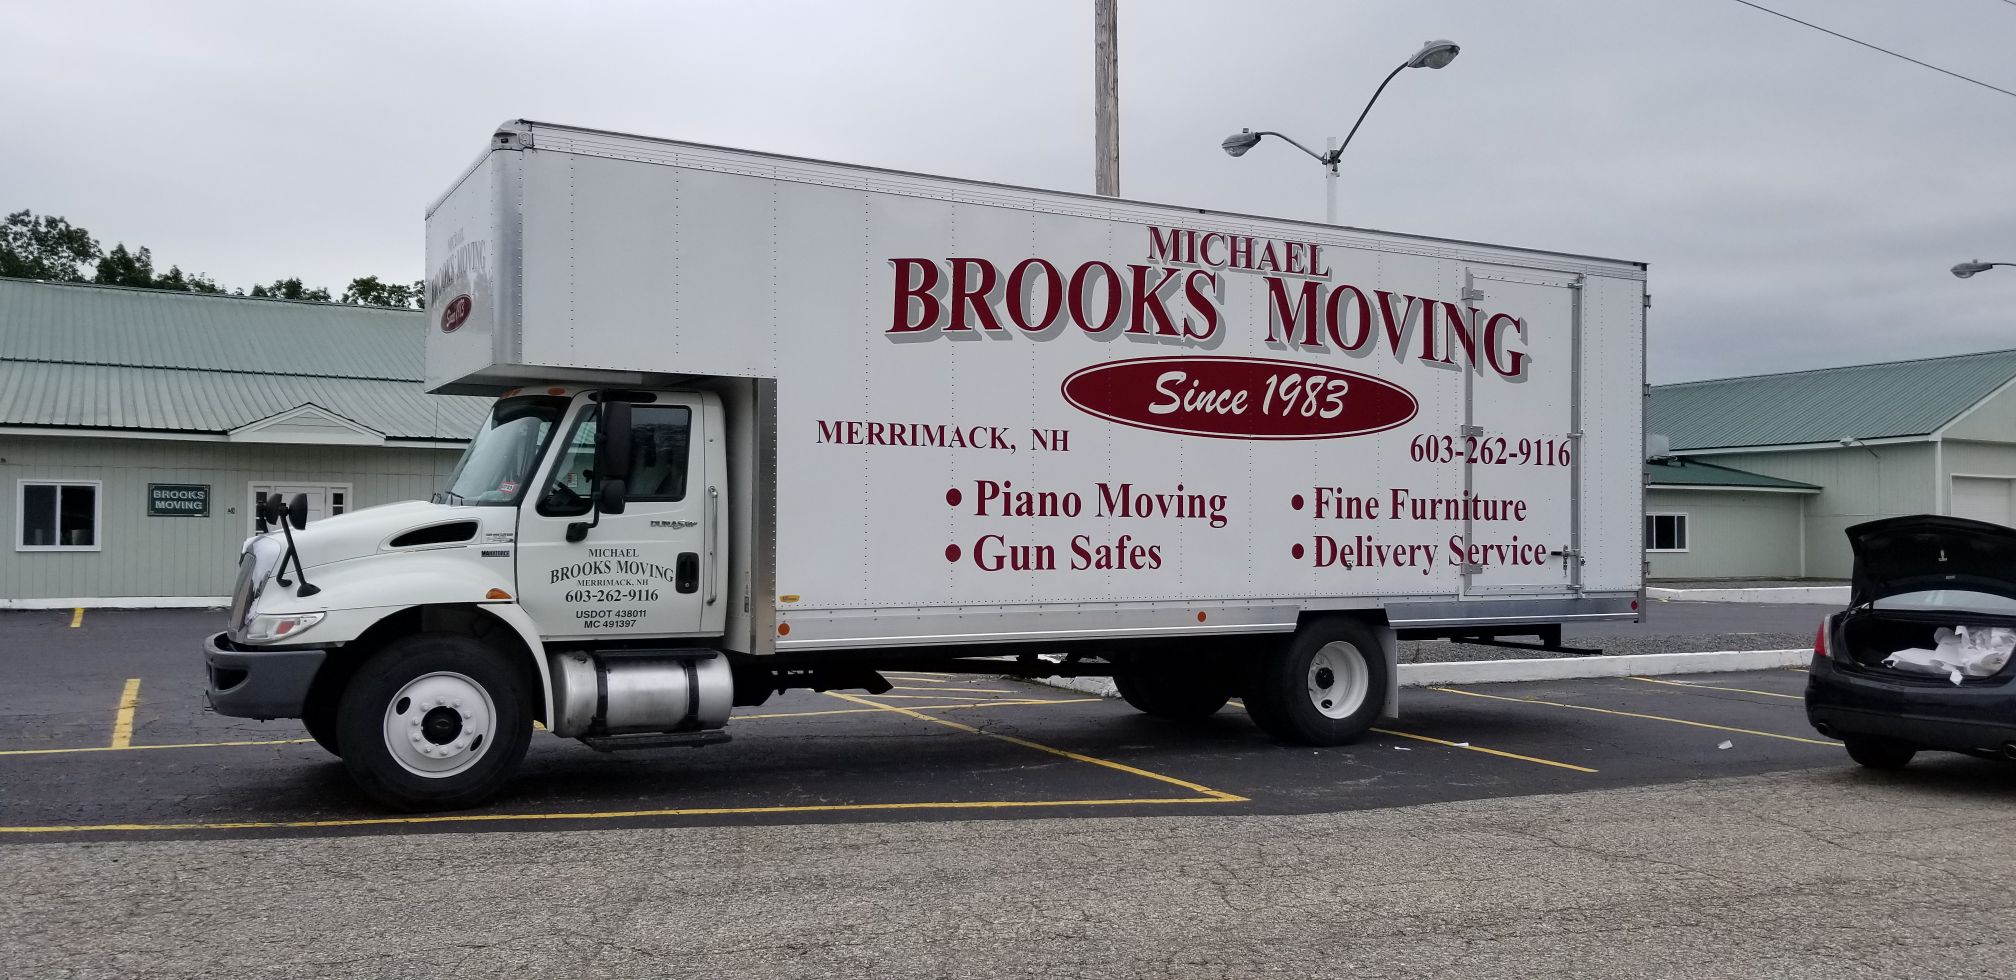 Michael Brooks Moving truck wrap